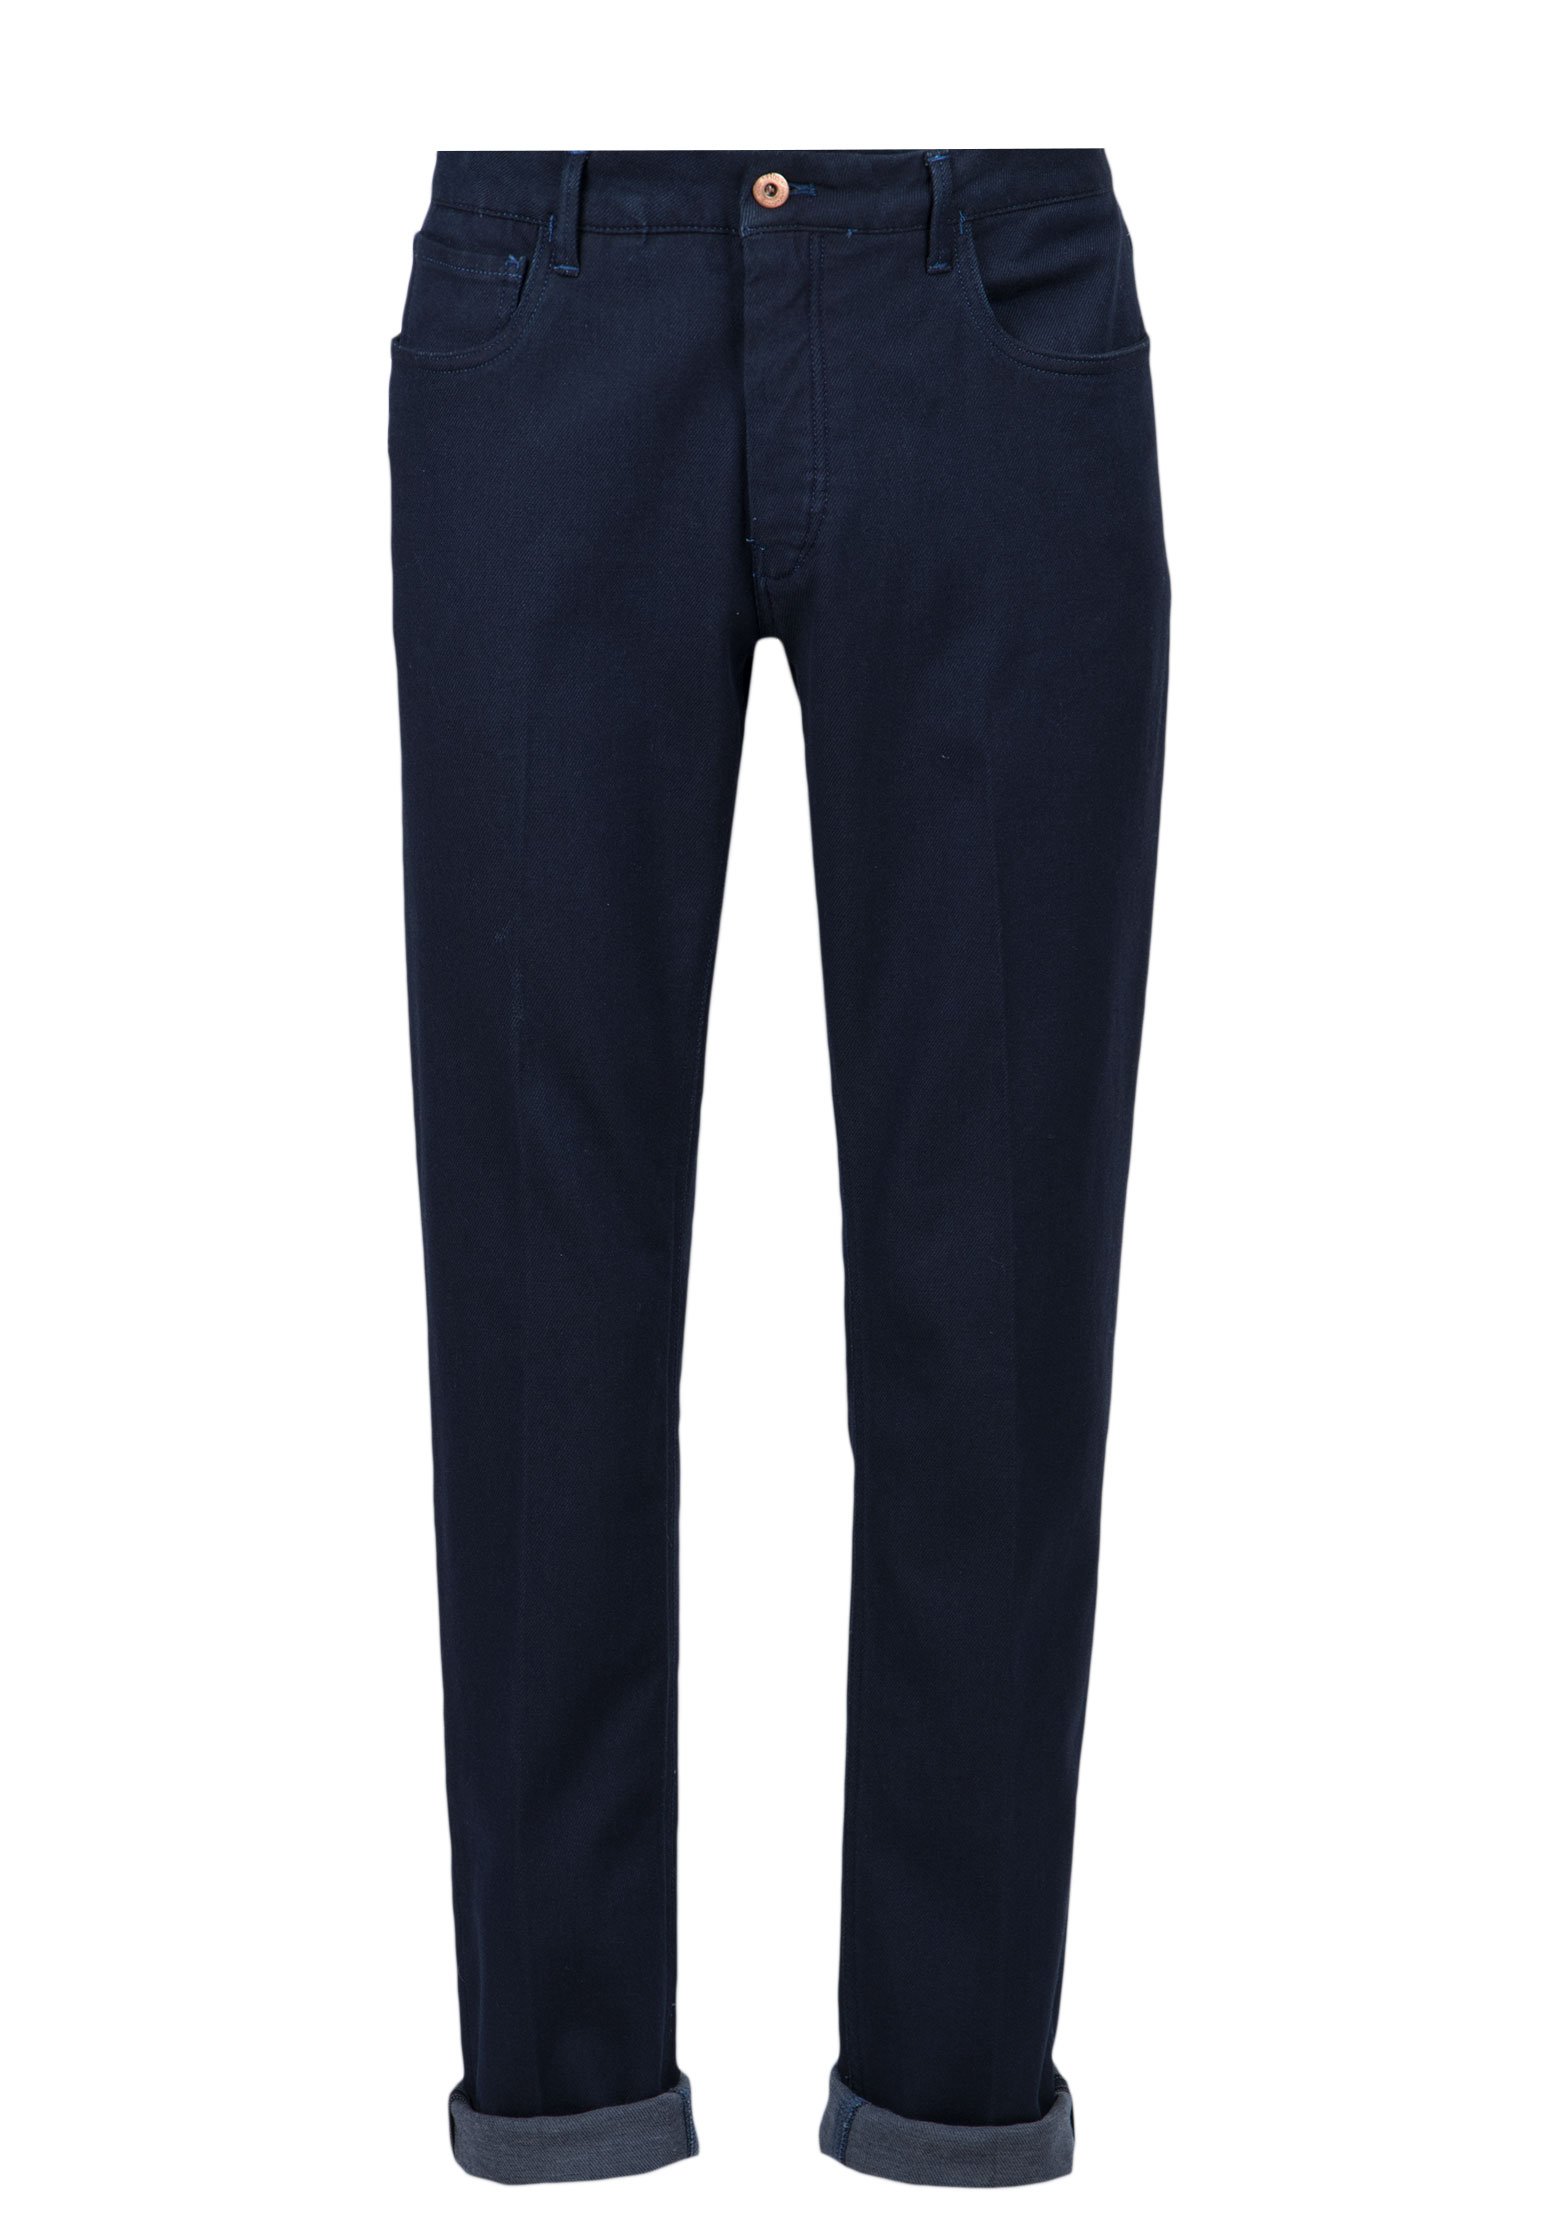 Джинсы мужские Pantaloni Torino 104204 синие 31